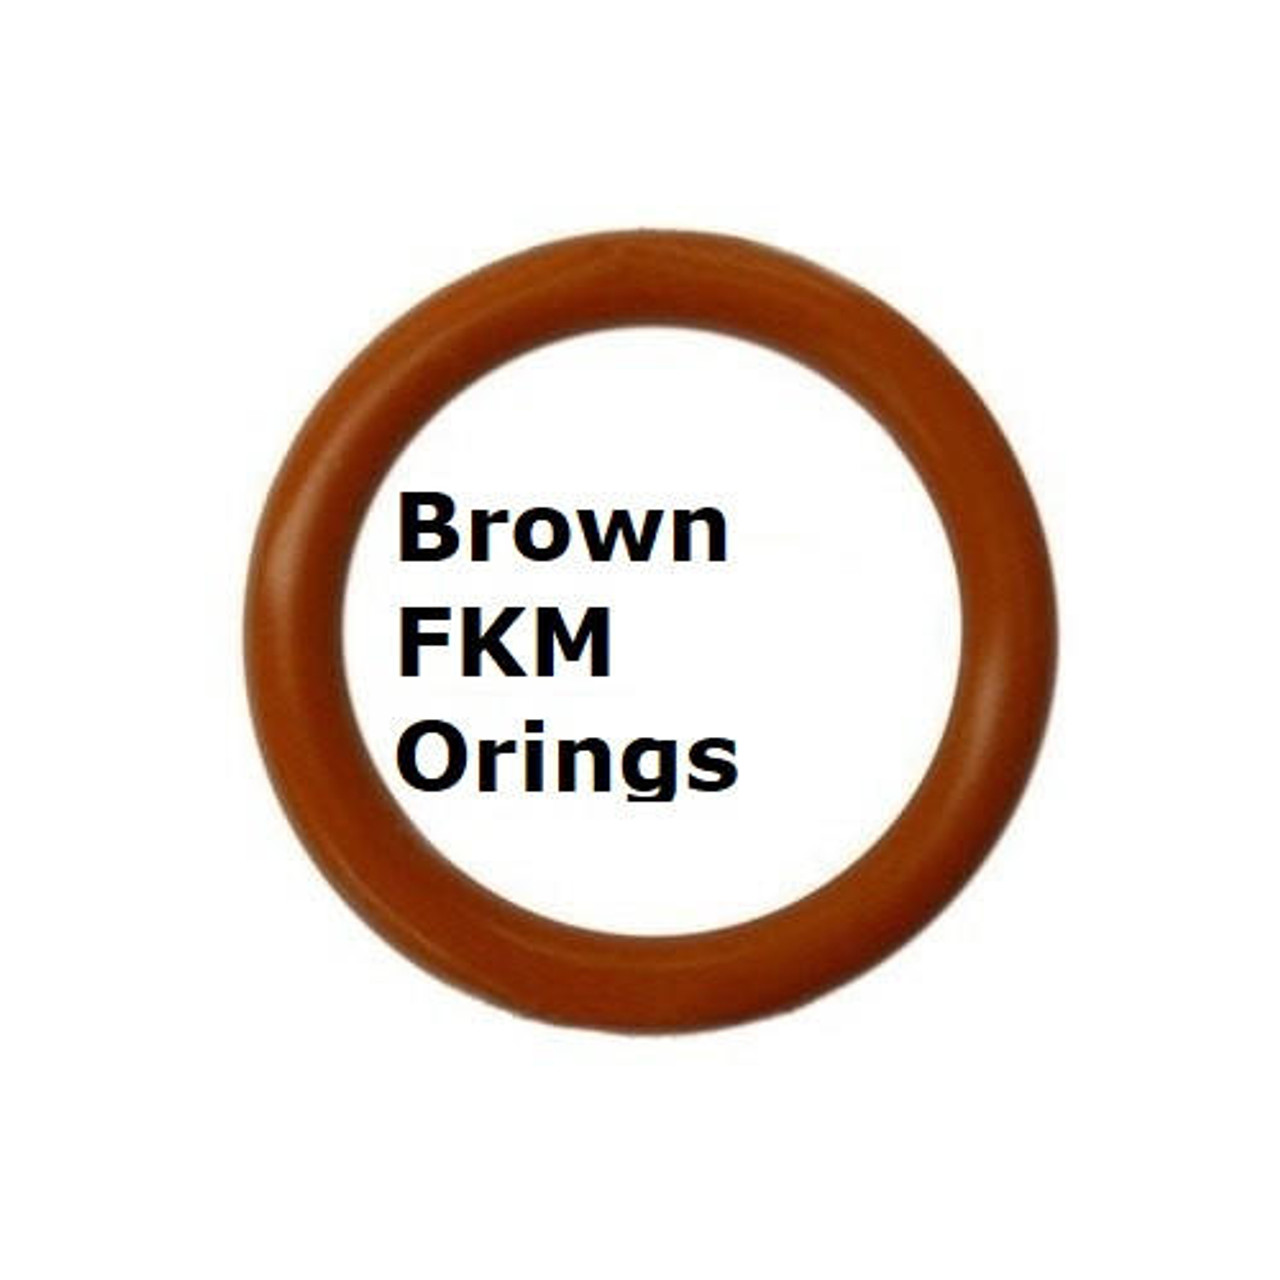 FKM Heat Resistant Brown O-rings  Size 226   Minimuum 2 pcs